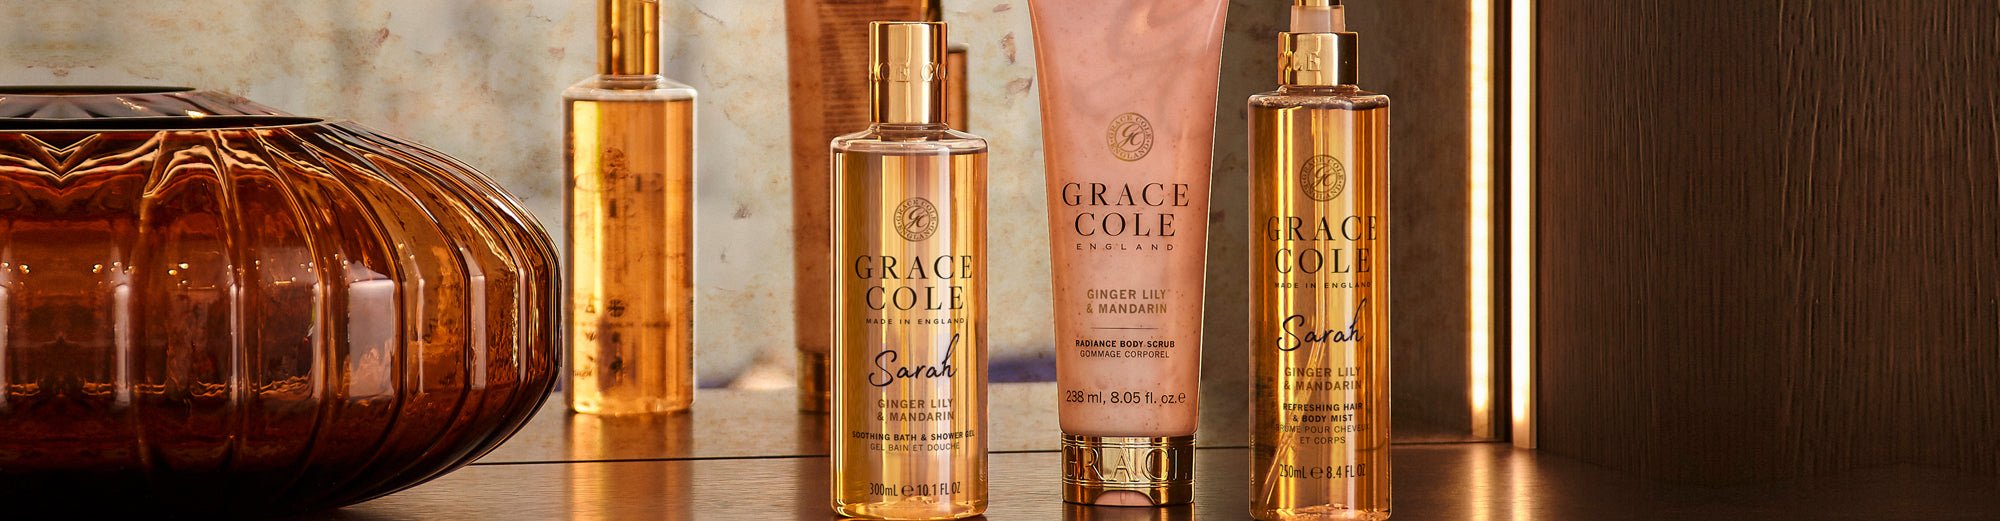 Grace Cole Self Care Collections - Grace Cole Limited